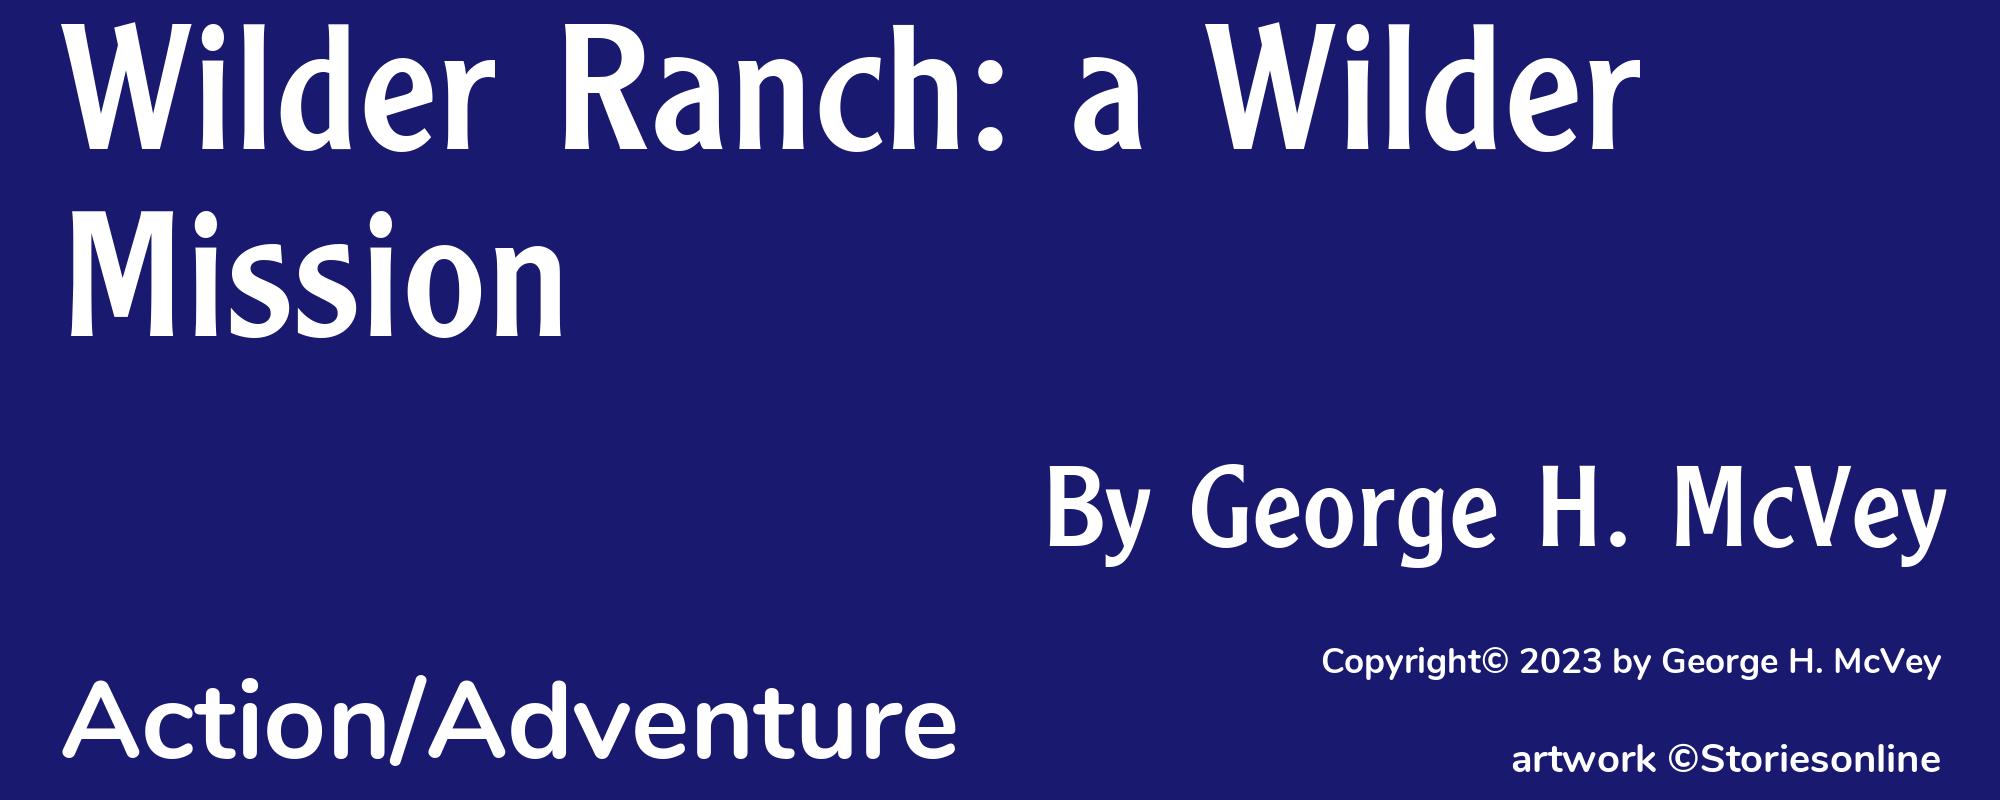 Wilder Ranch: a Wilder Mission - Cover